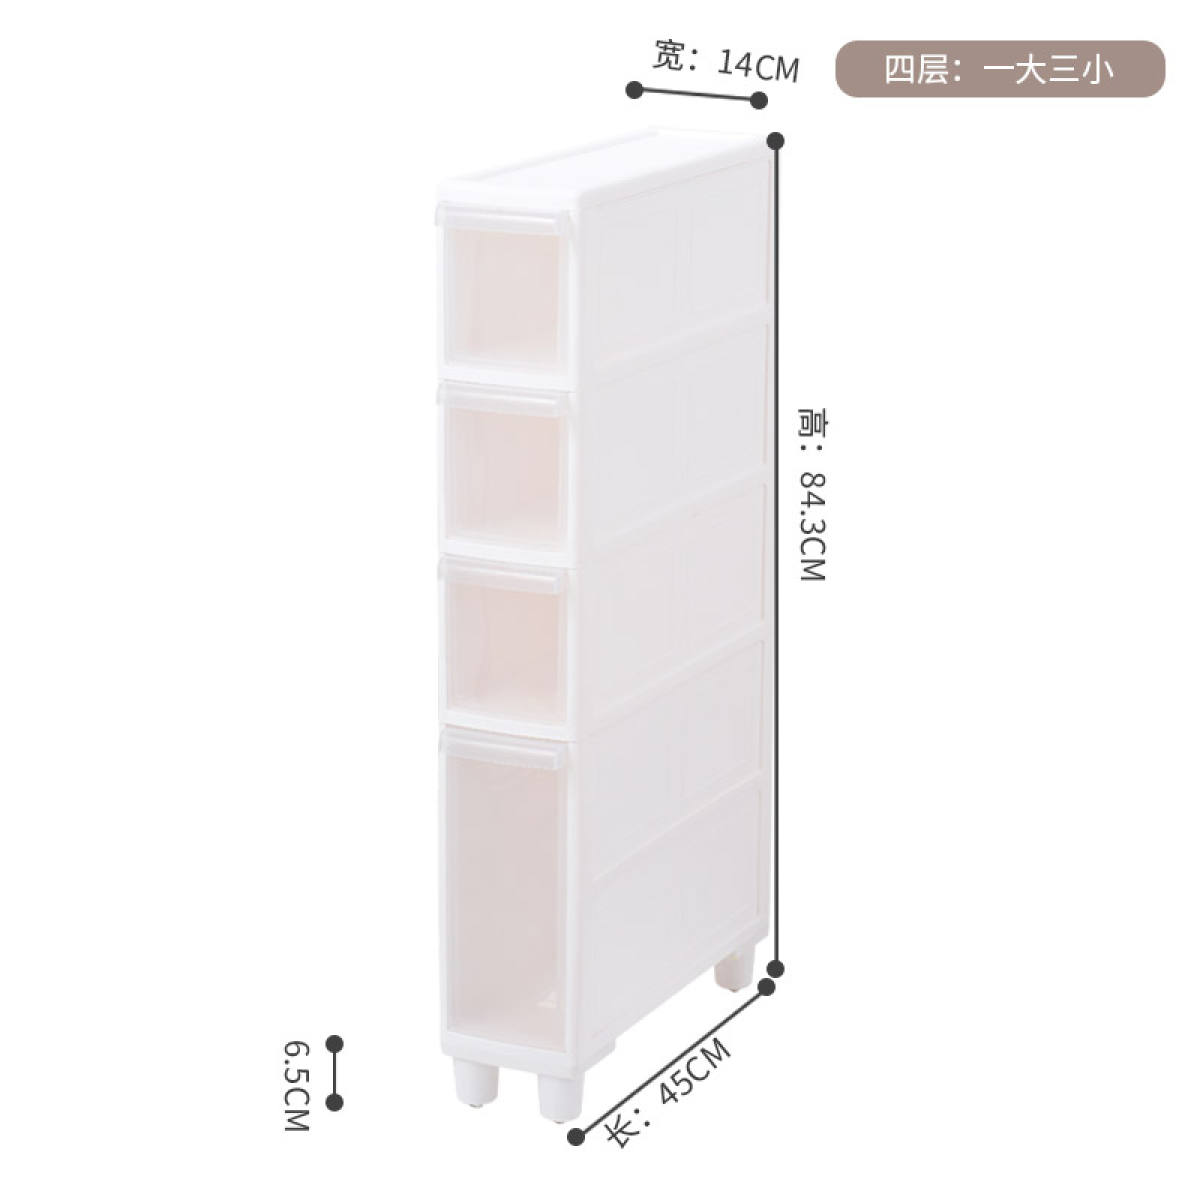 узкие шкафы для кухни глубина 30 см